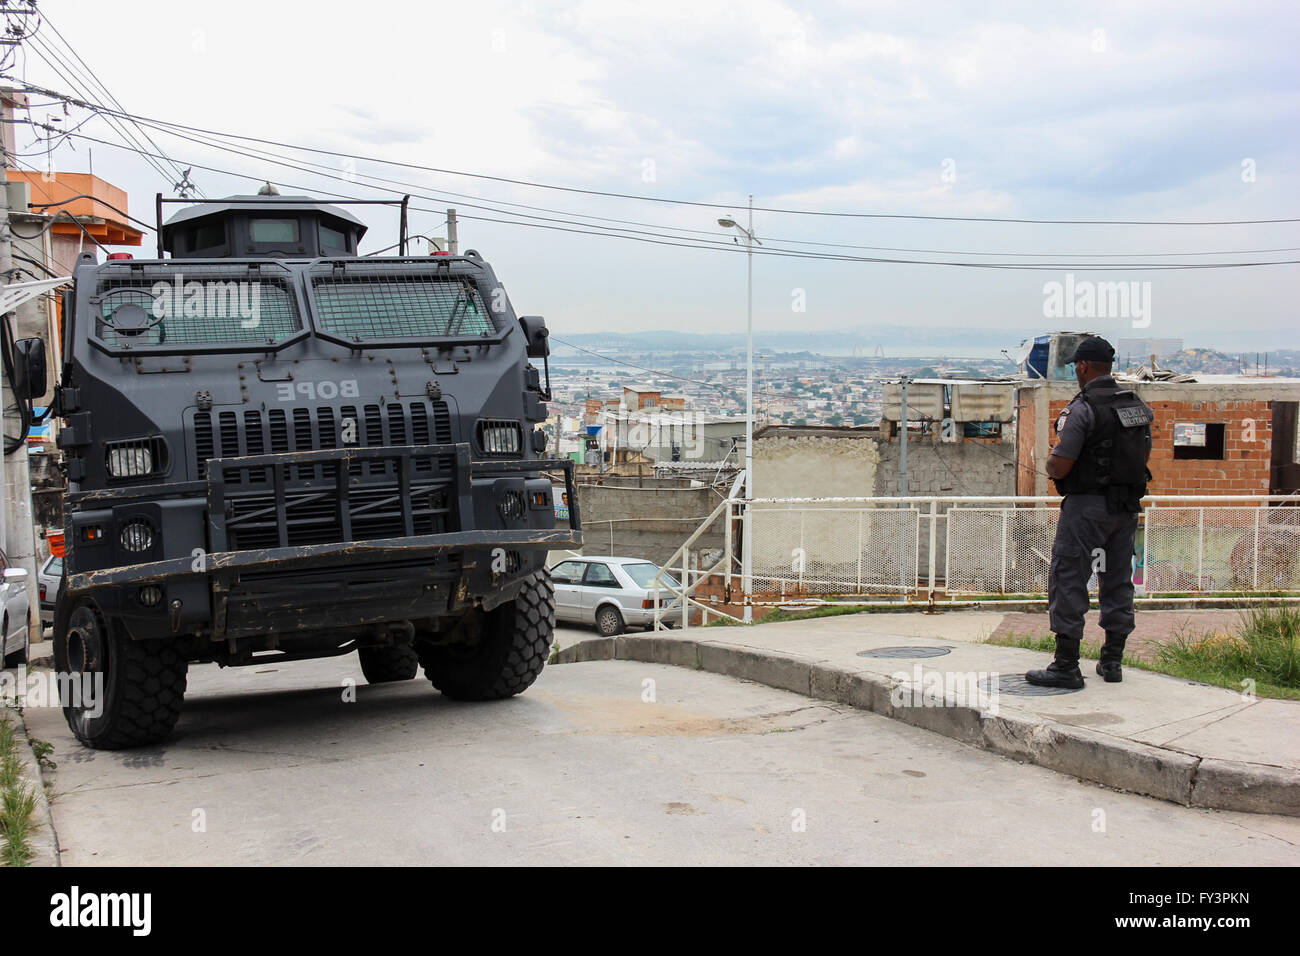 Rio de Janeiro, Brazil: View of the UPP - Pacifying Police Unit of the Complexo do Alemão. The public security system deployed i Stock Photo